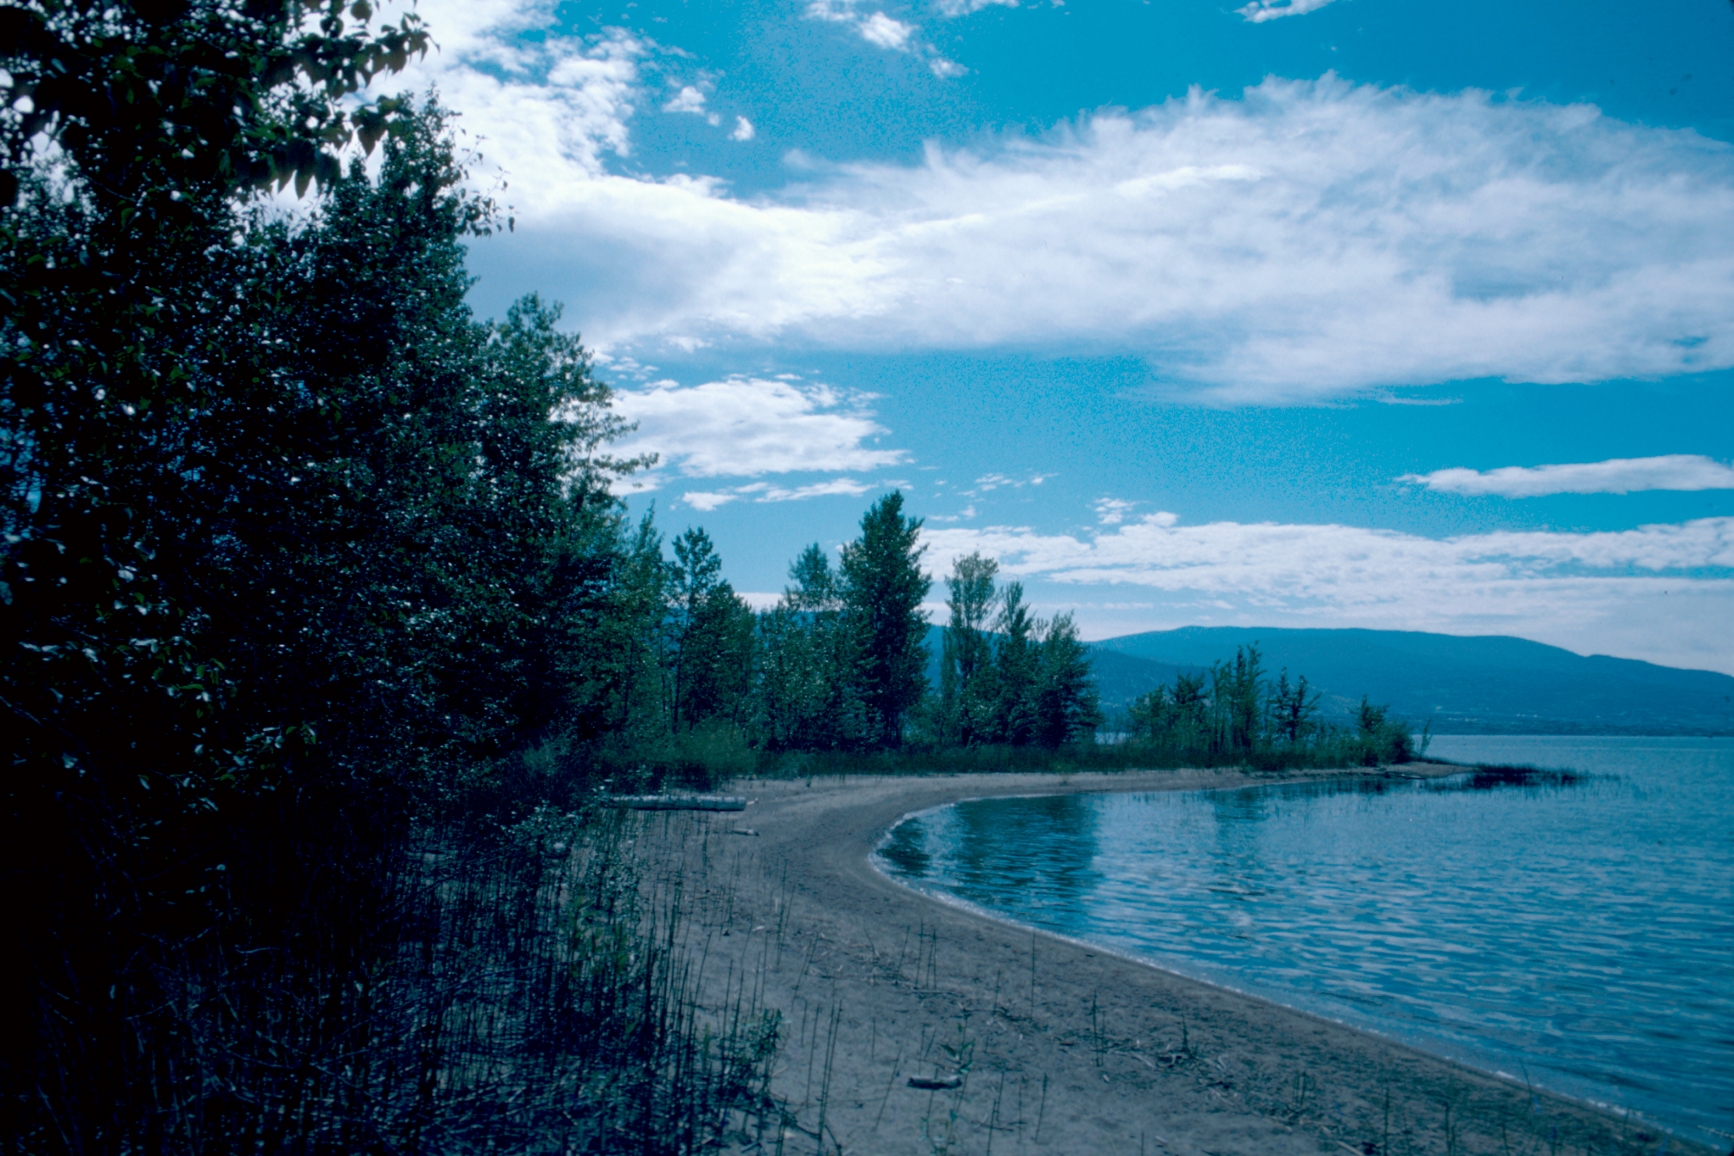 Lakeshore of Okanagan Lake